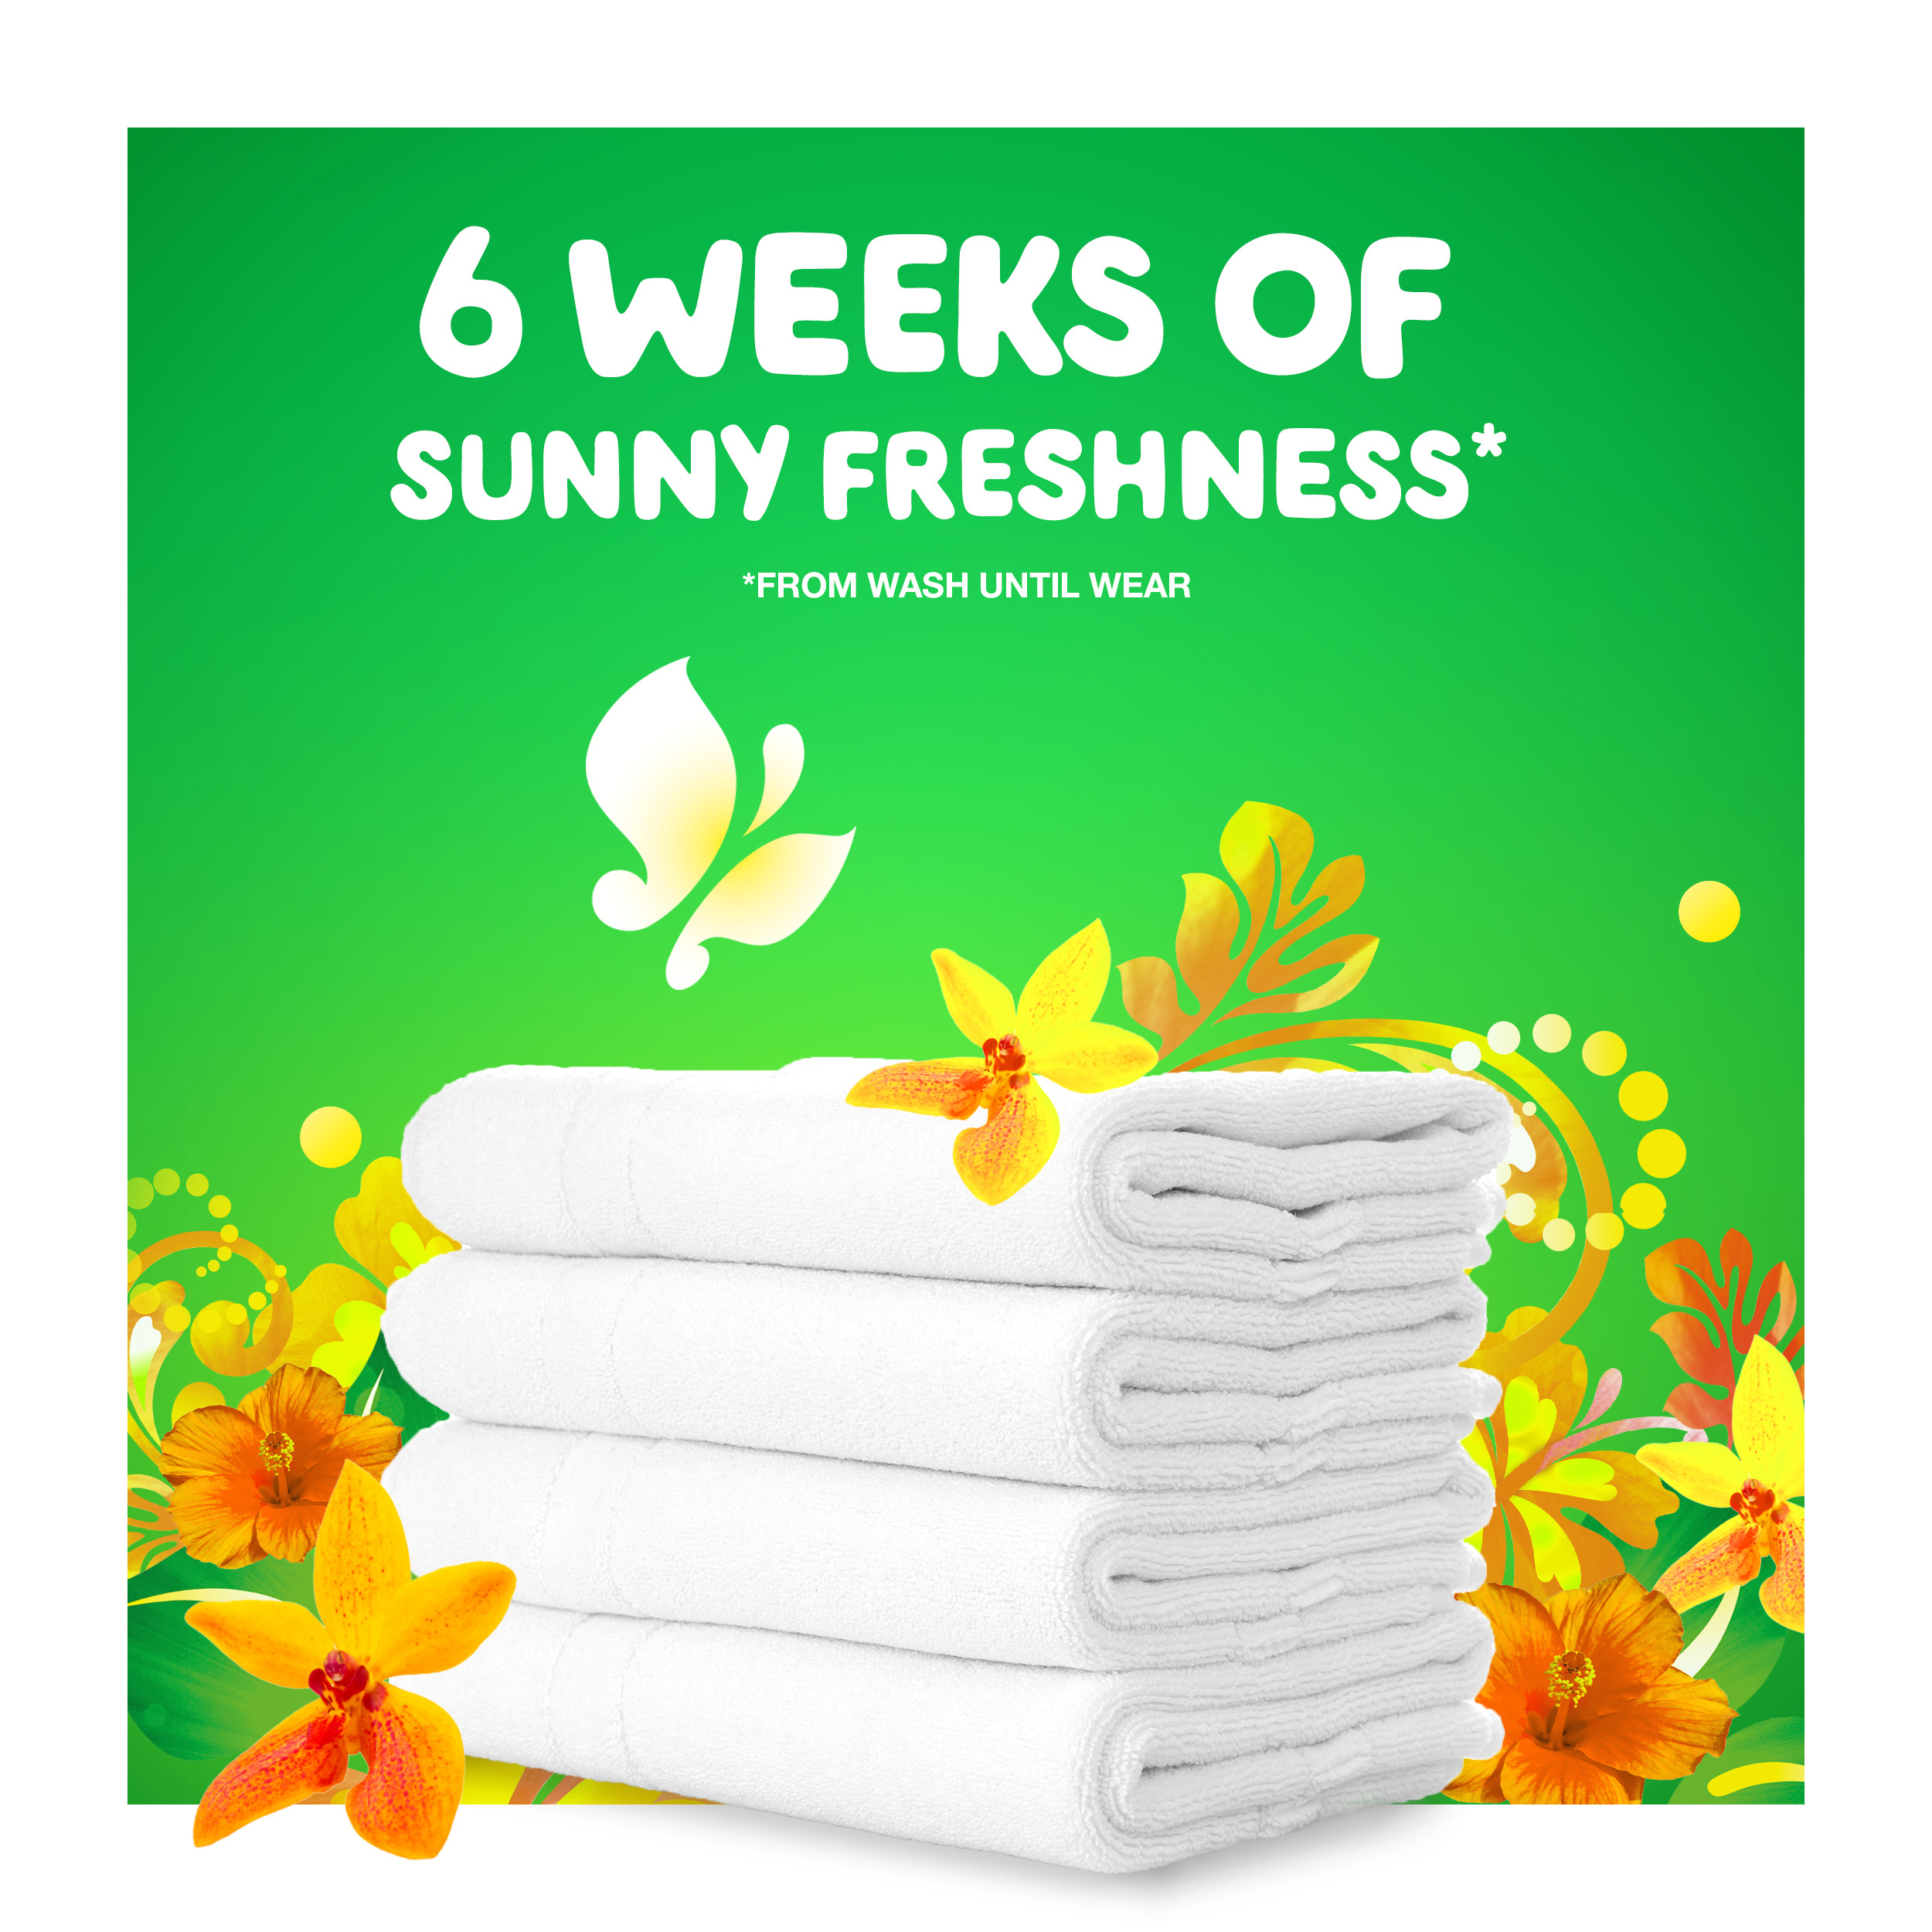 Freshly washed towels with Gain Island Fresh Liquid Laundry Detergent keep six weeks of summery freshness